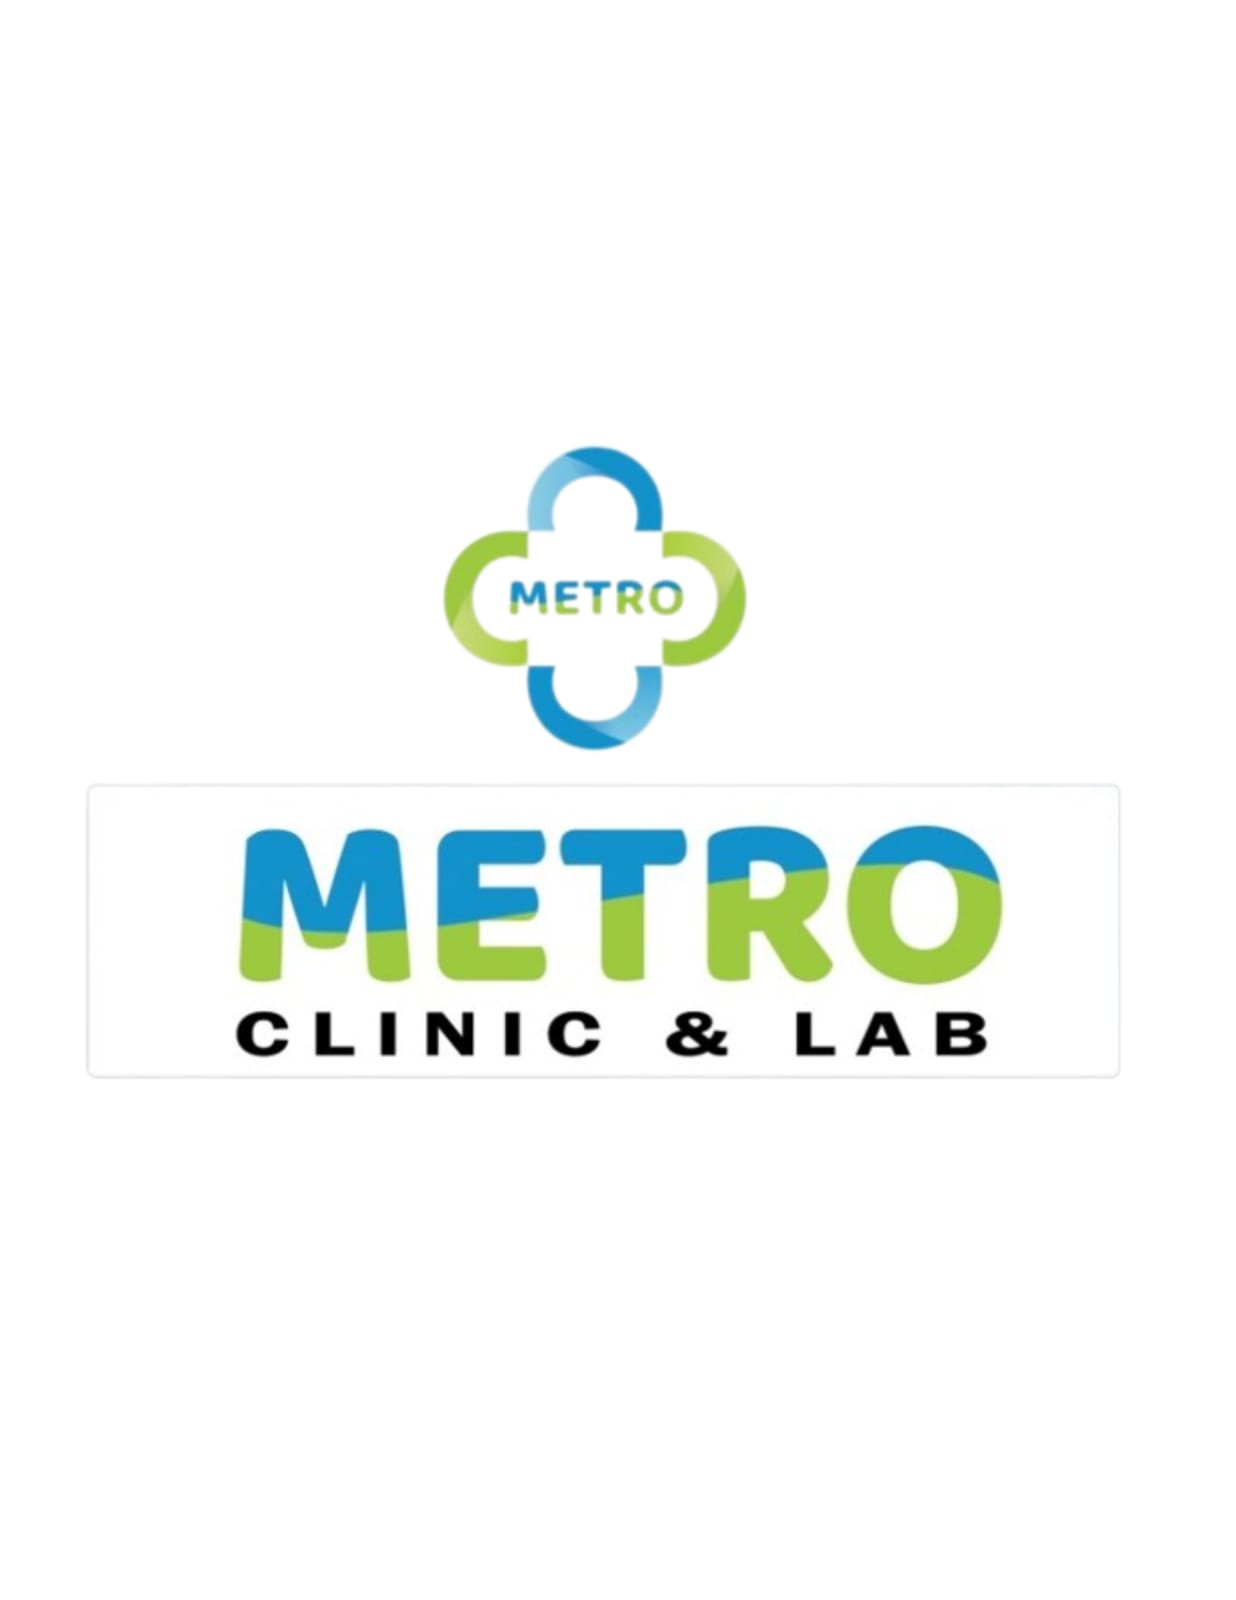 Metro Clinic & Lab